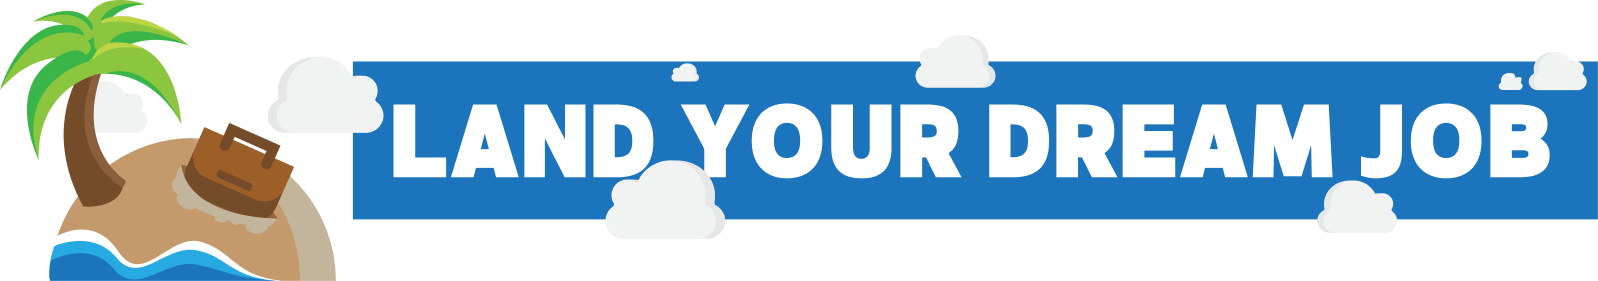 Land Your Dream Job: The Complete Unreal & Unity Developer's Guide